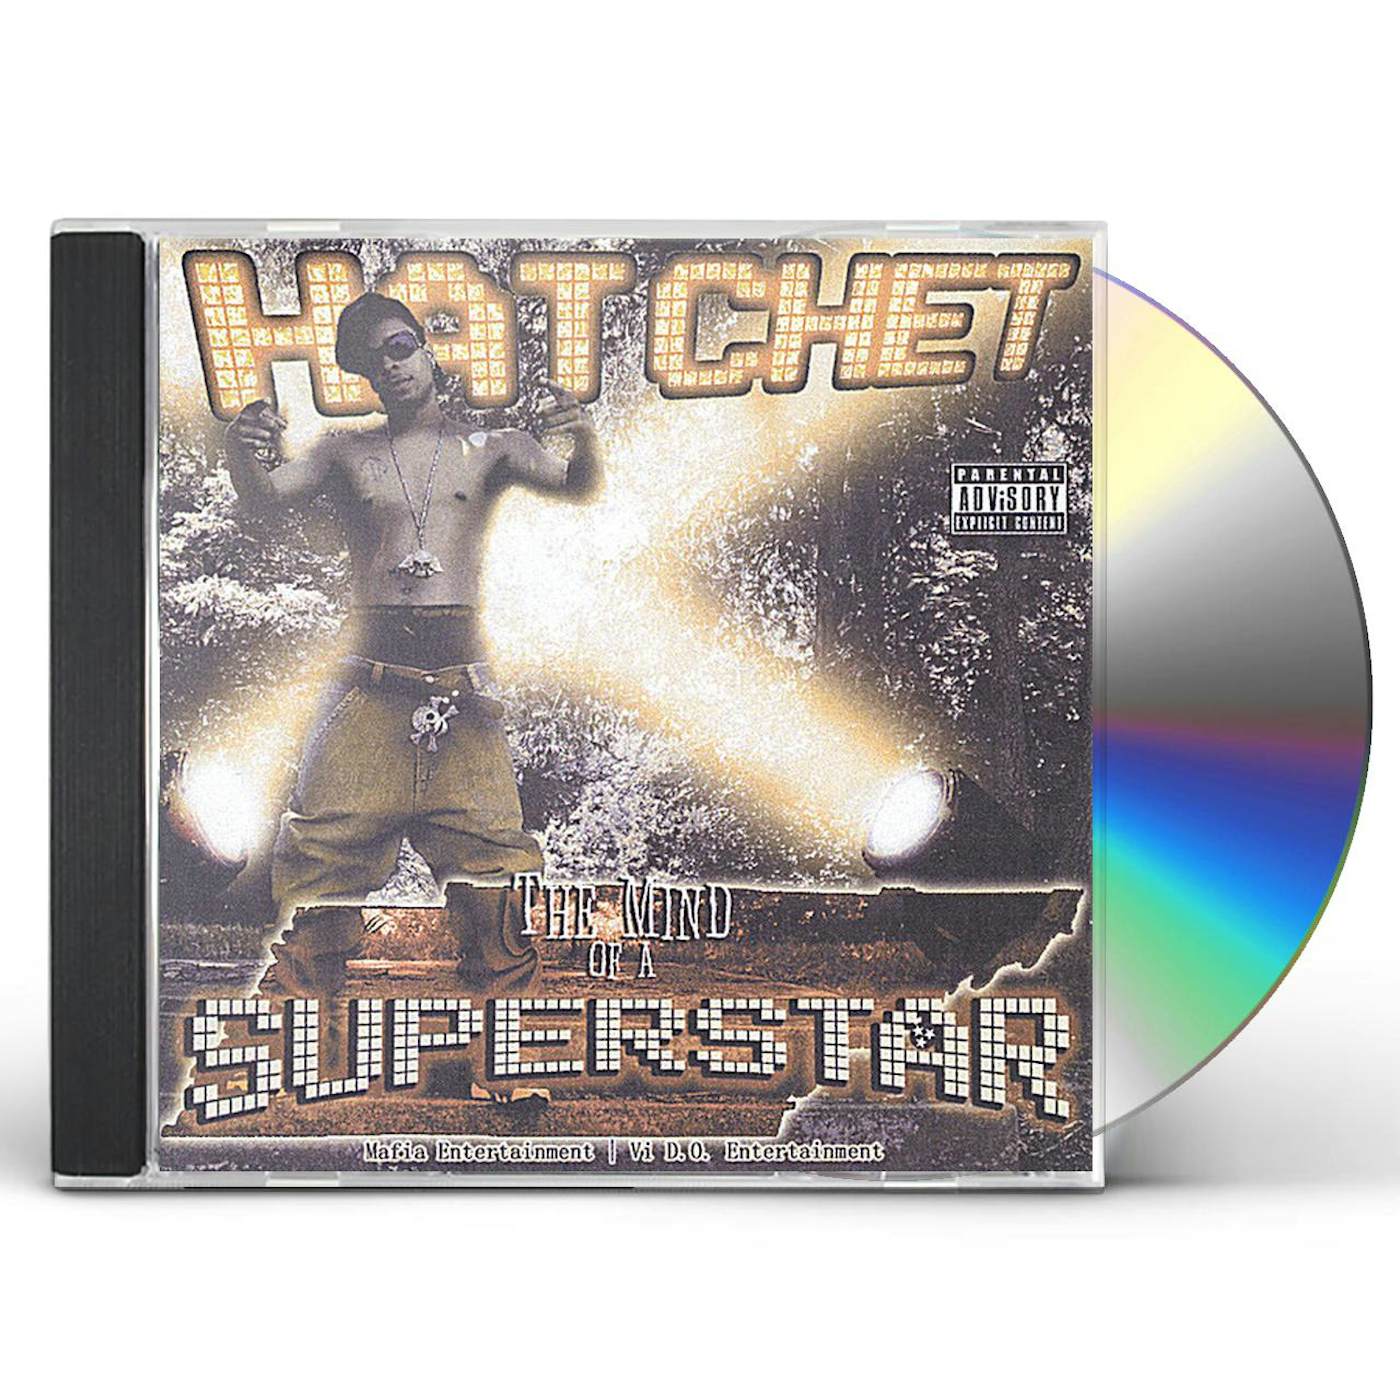 Hatchet MIND OF A SUPERSTAR CD